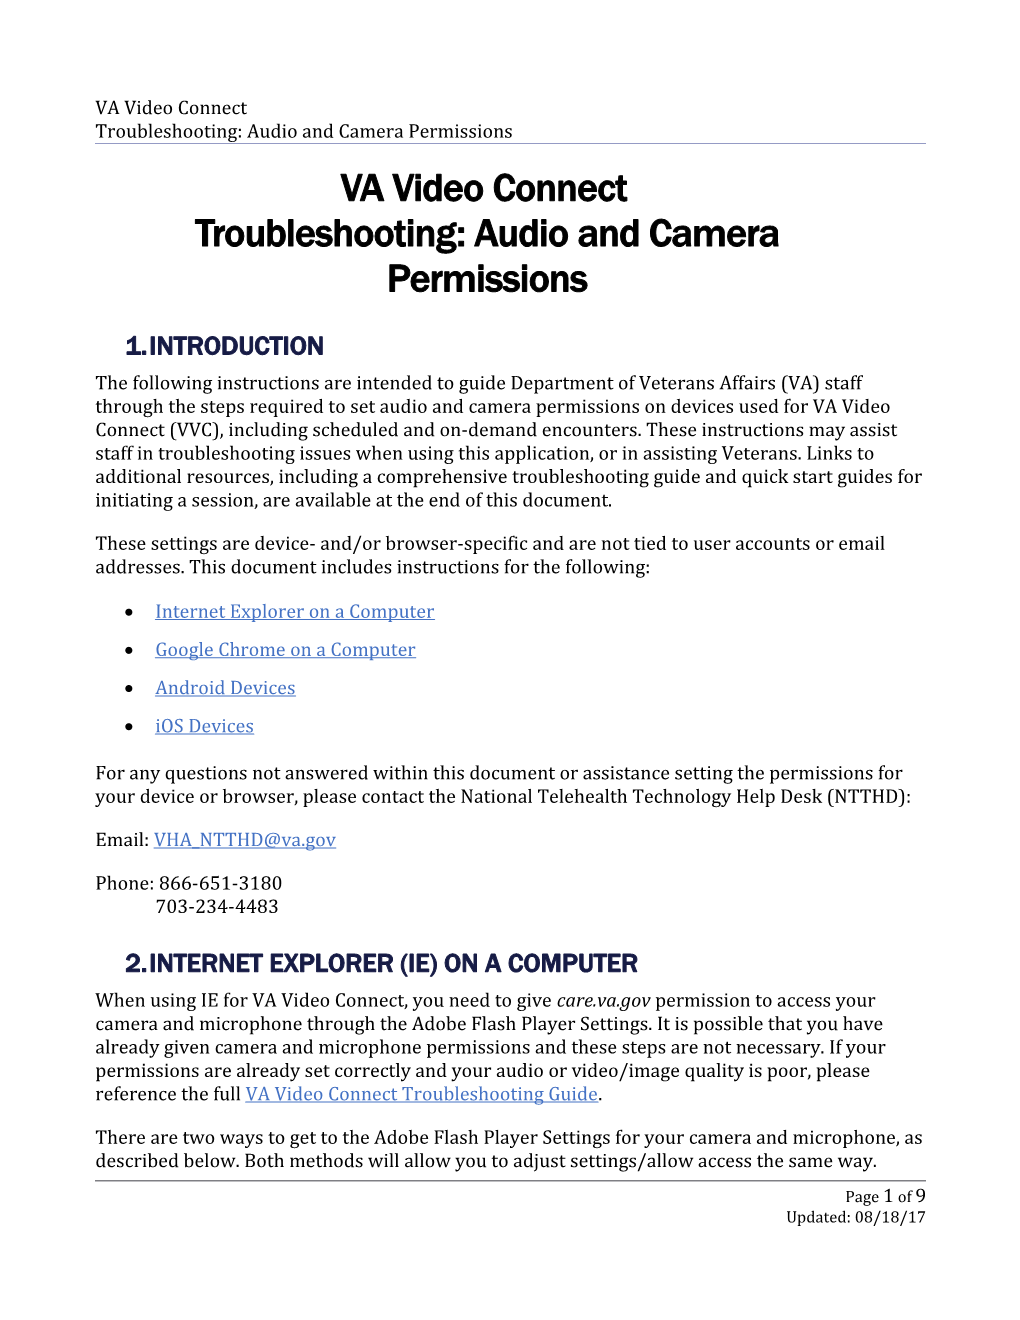 VA Video Connect Troubleshooting: Audio & Camera Permissions